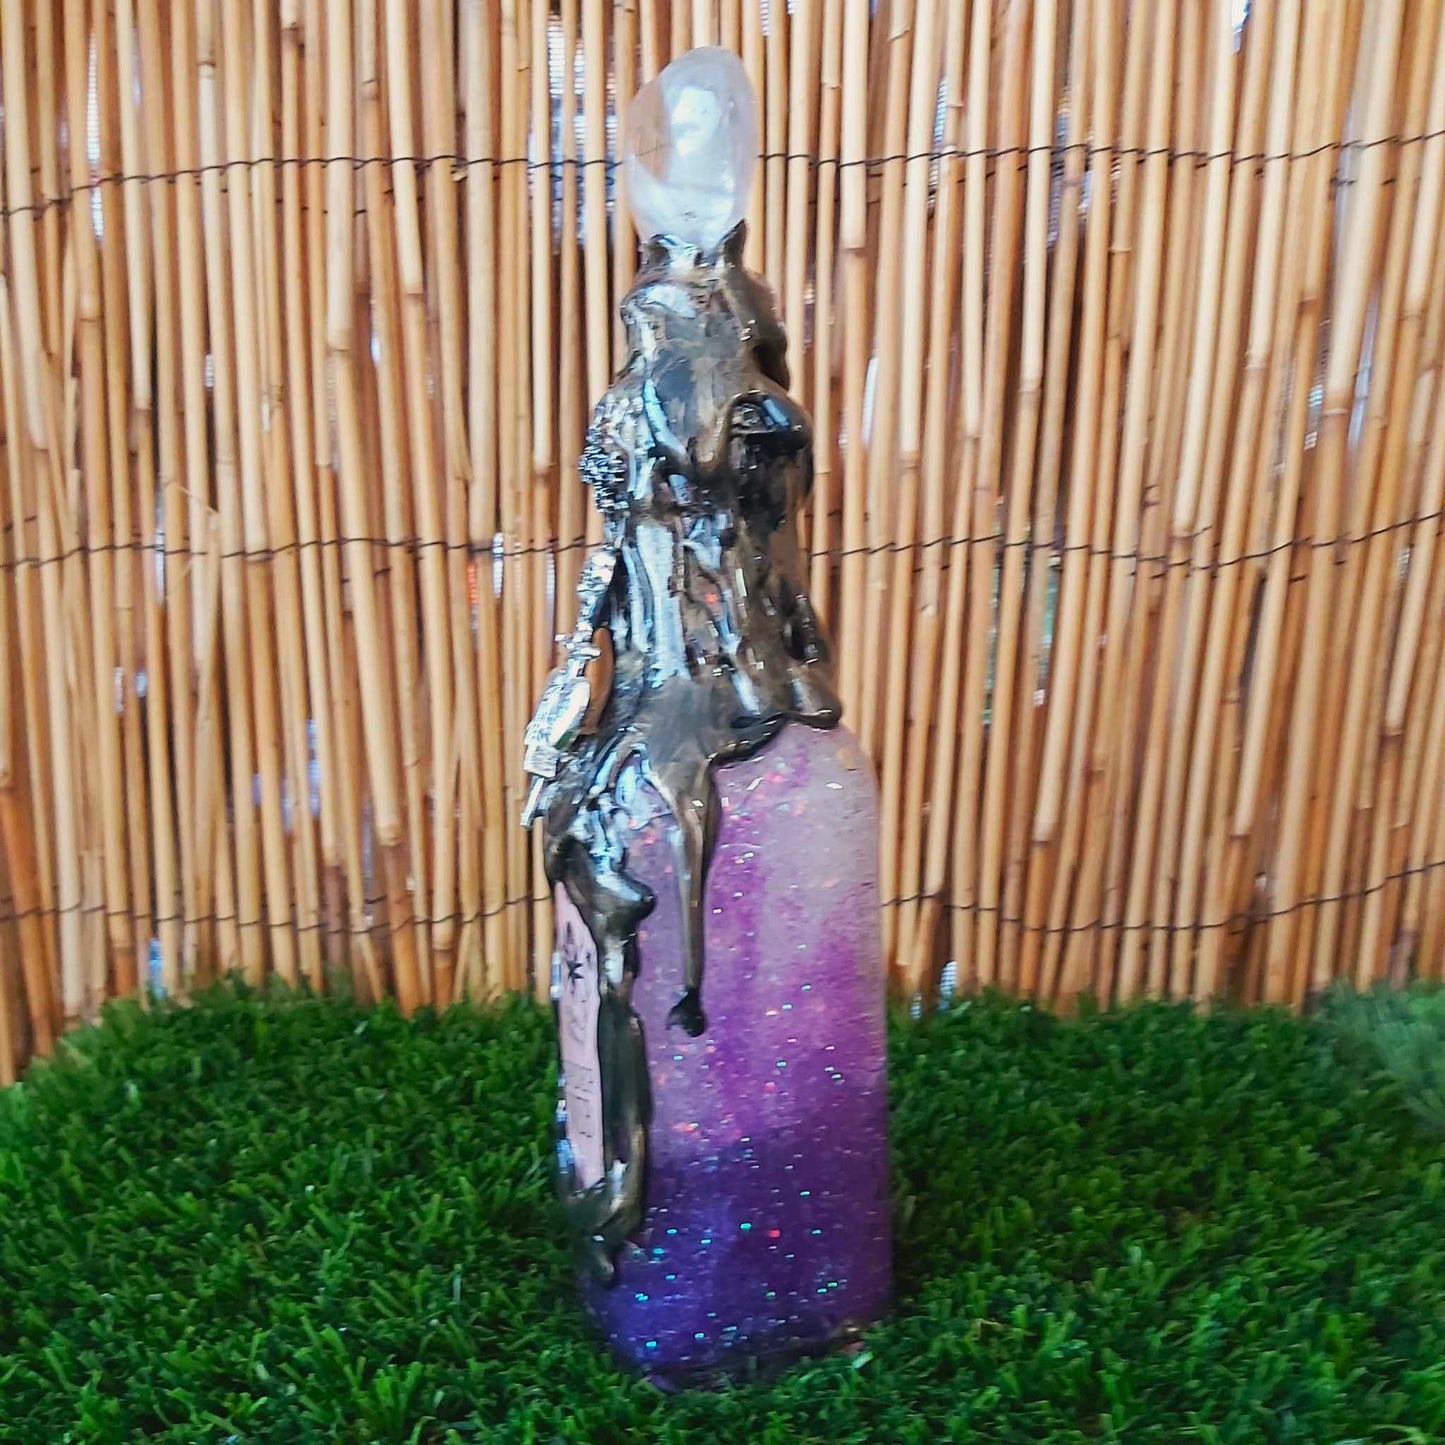 Spiritual & Divination Spell Potion Altar Bottle-Clear Quartz